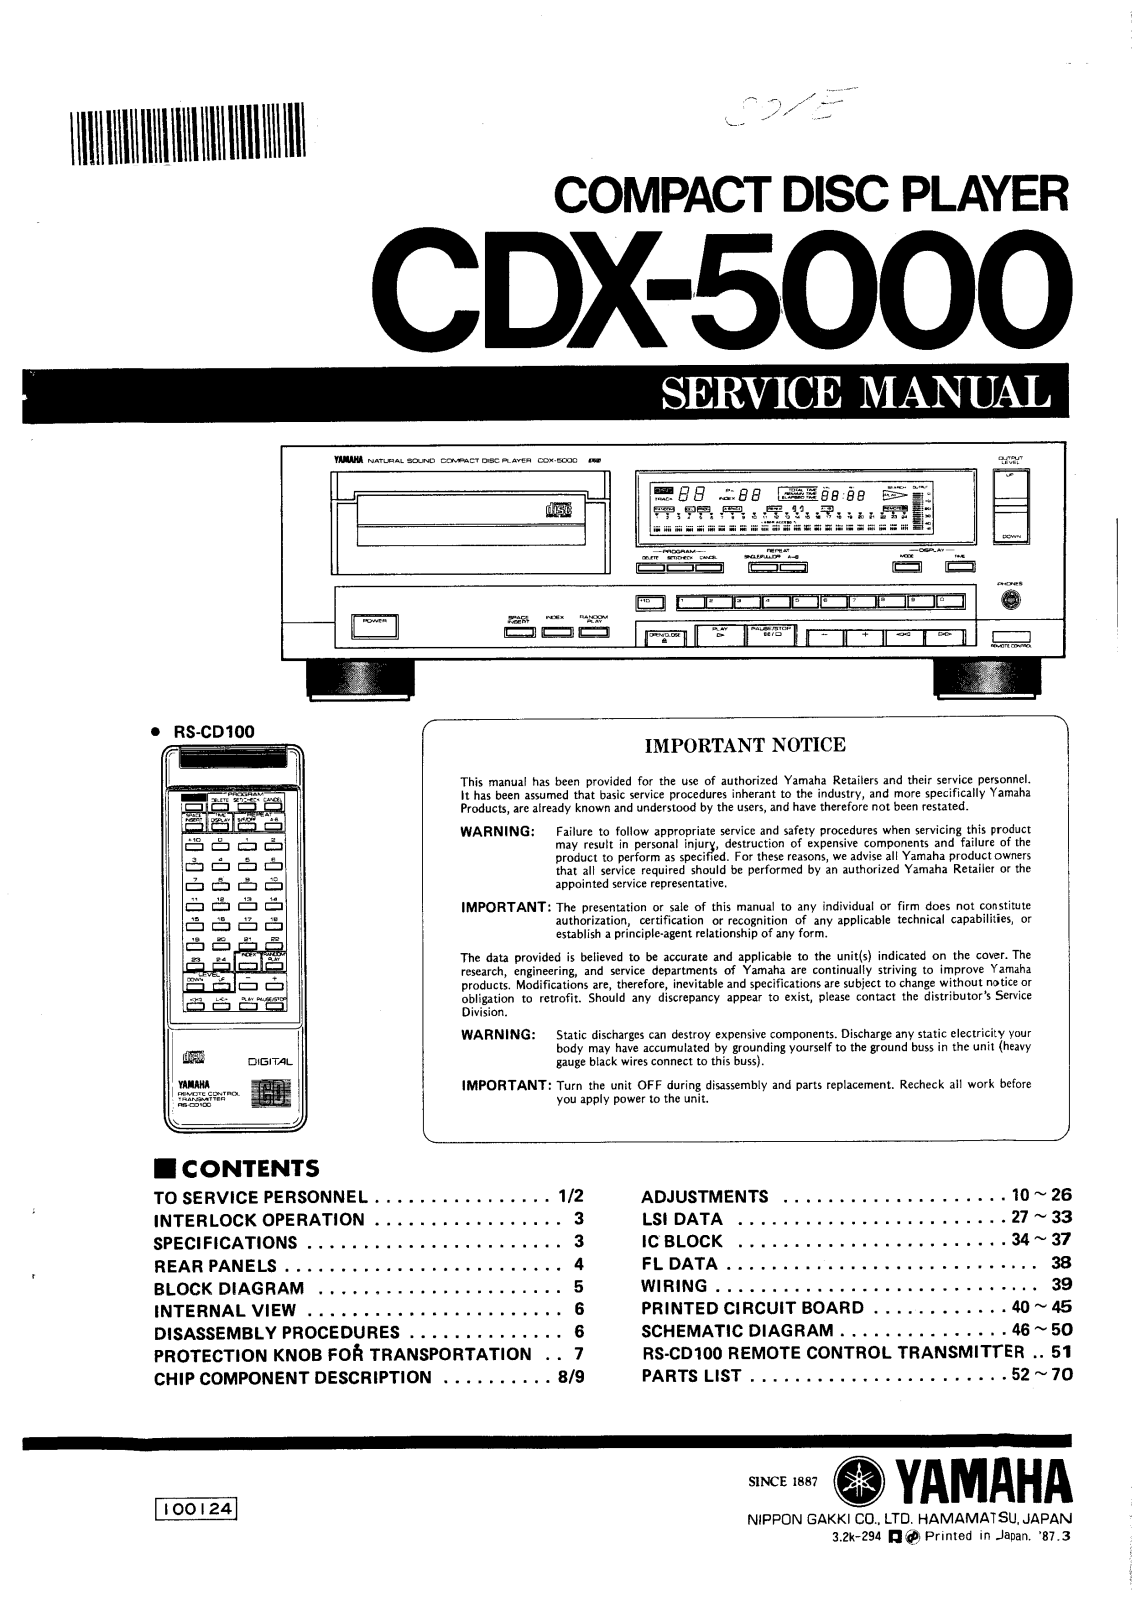 Yamaha CDX-5000 Service Manual